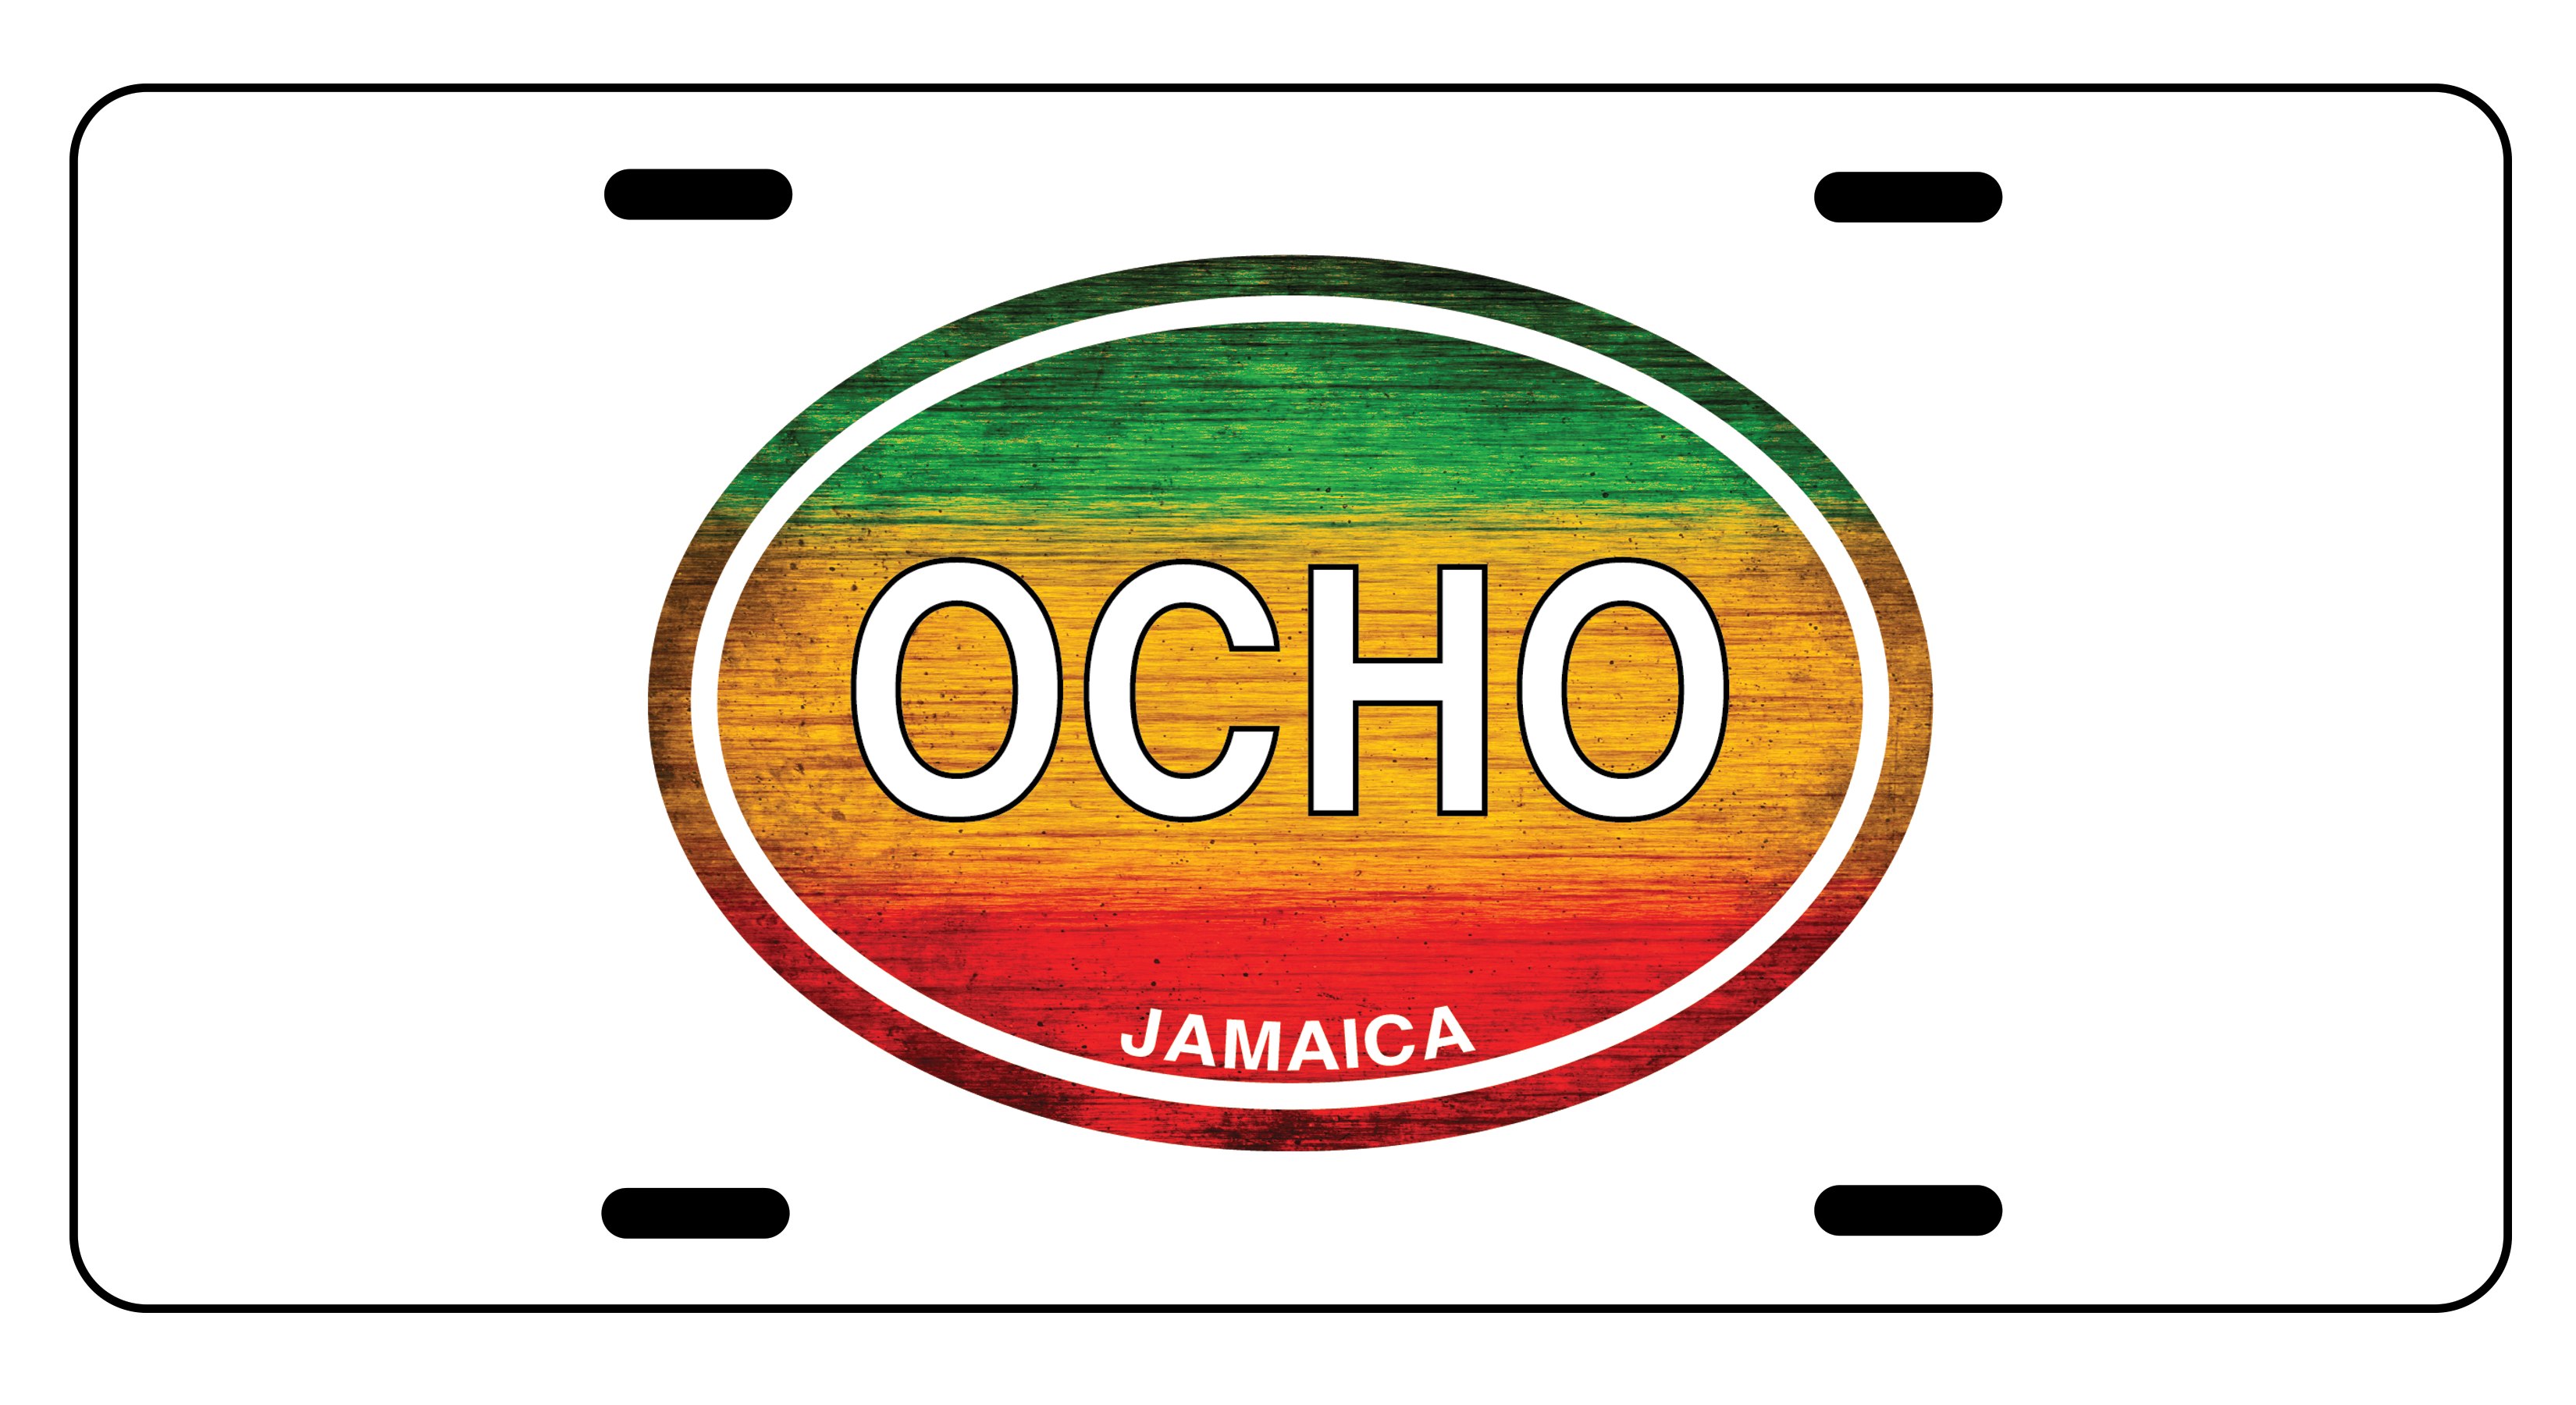 Ocho Rios Rasta Logo License Plates - My Destination Location